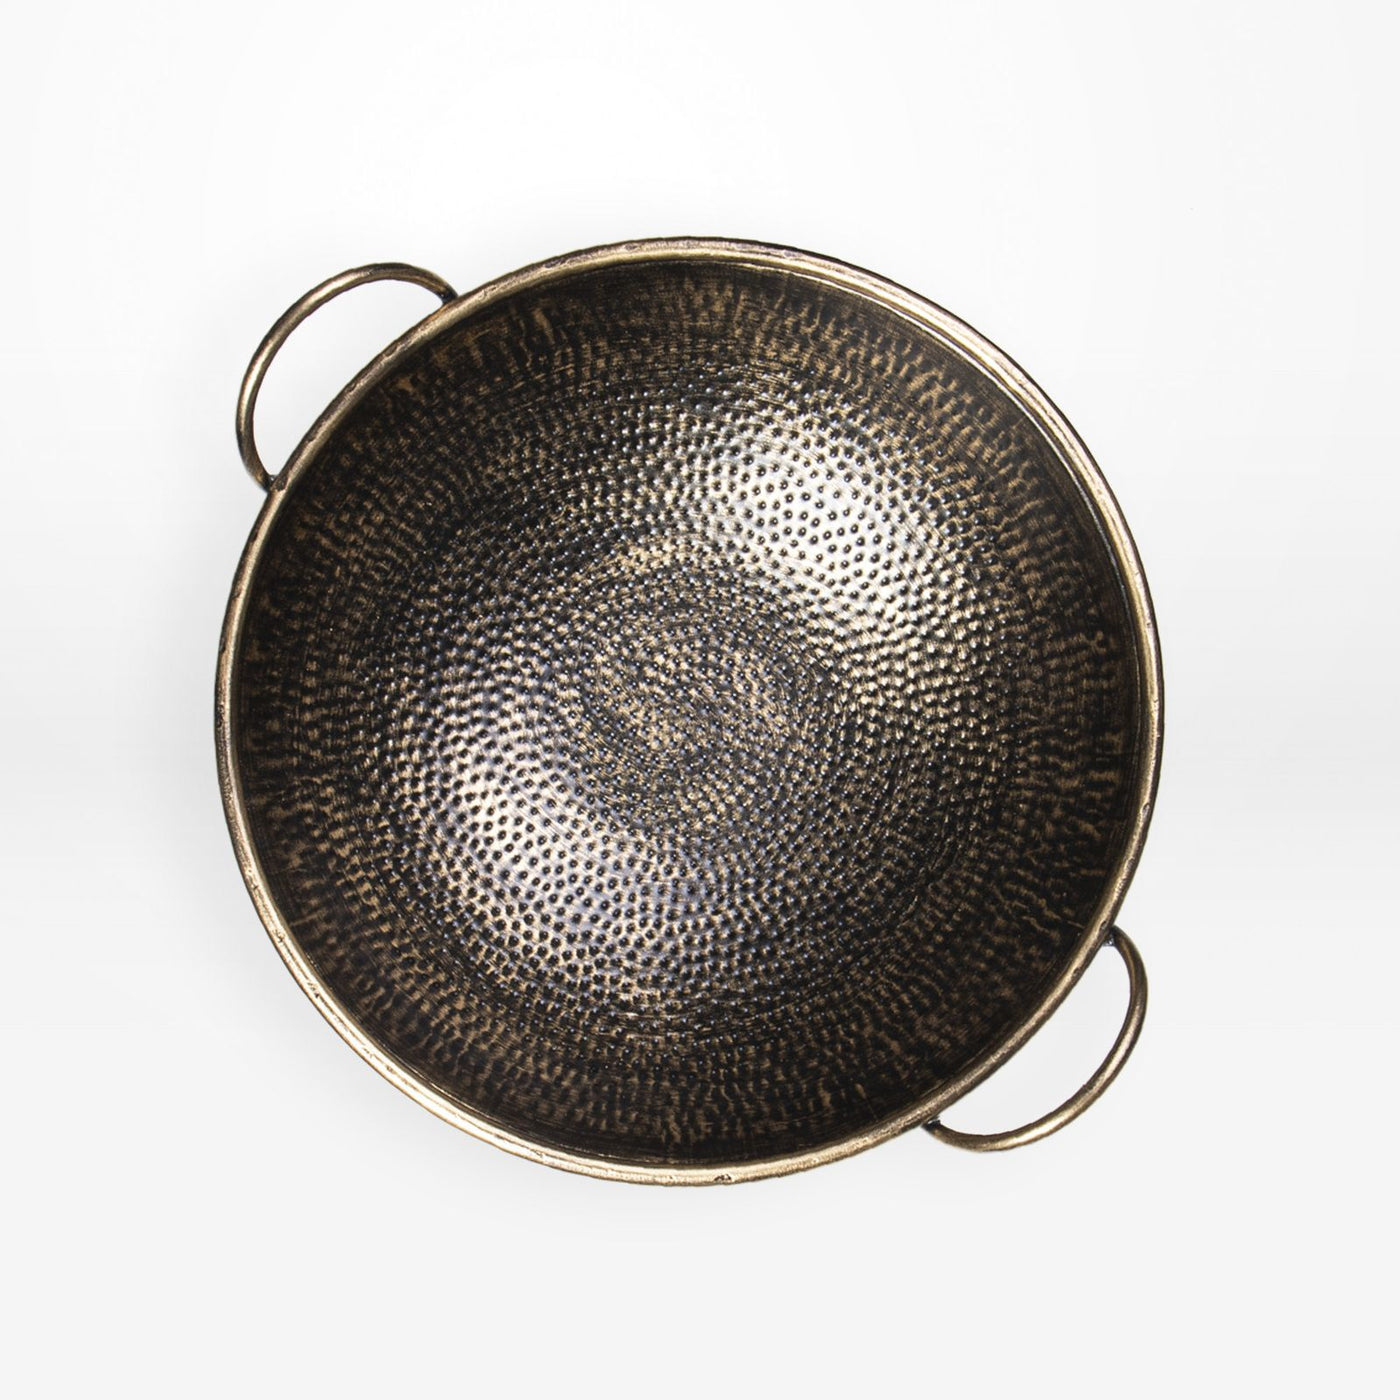 Luxor Pressed Metal Decorative Bowl